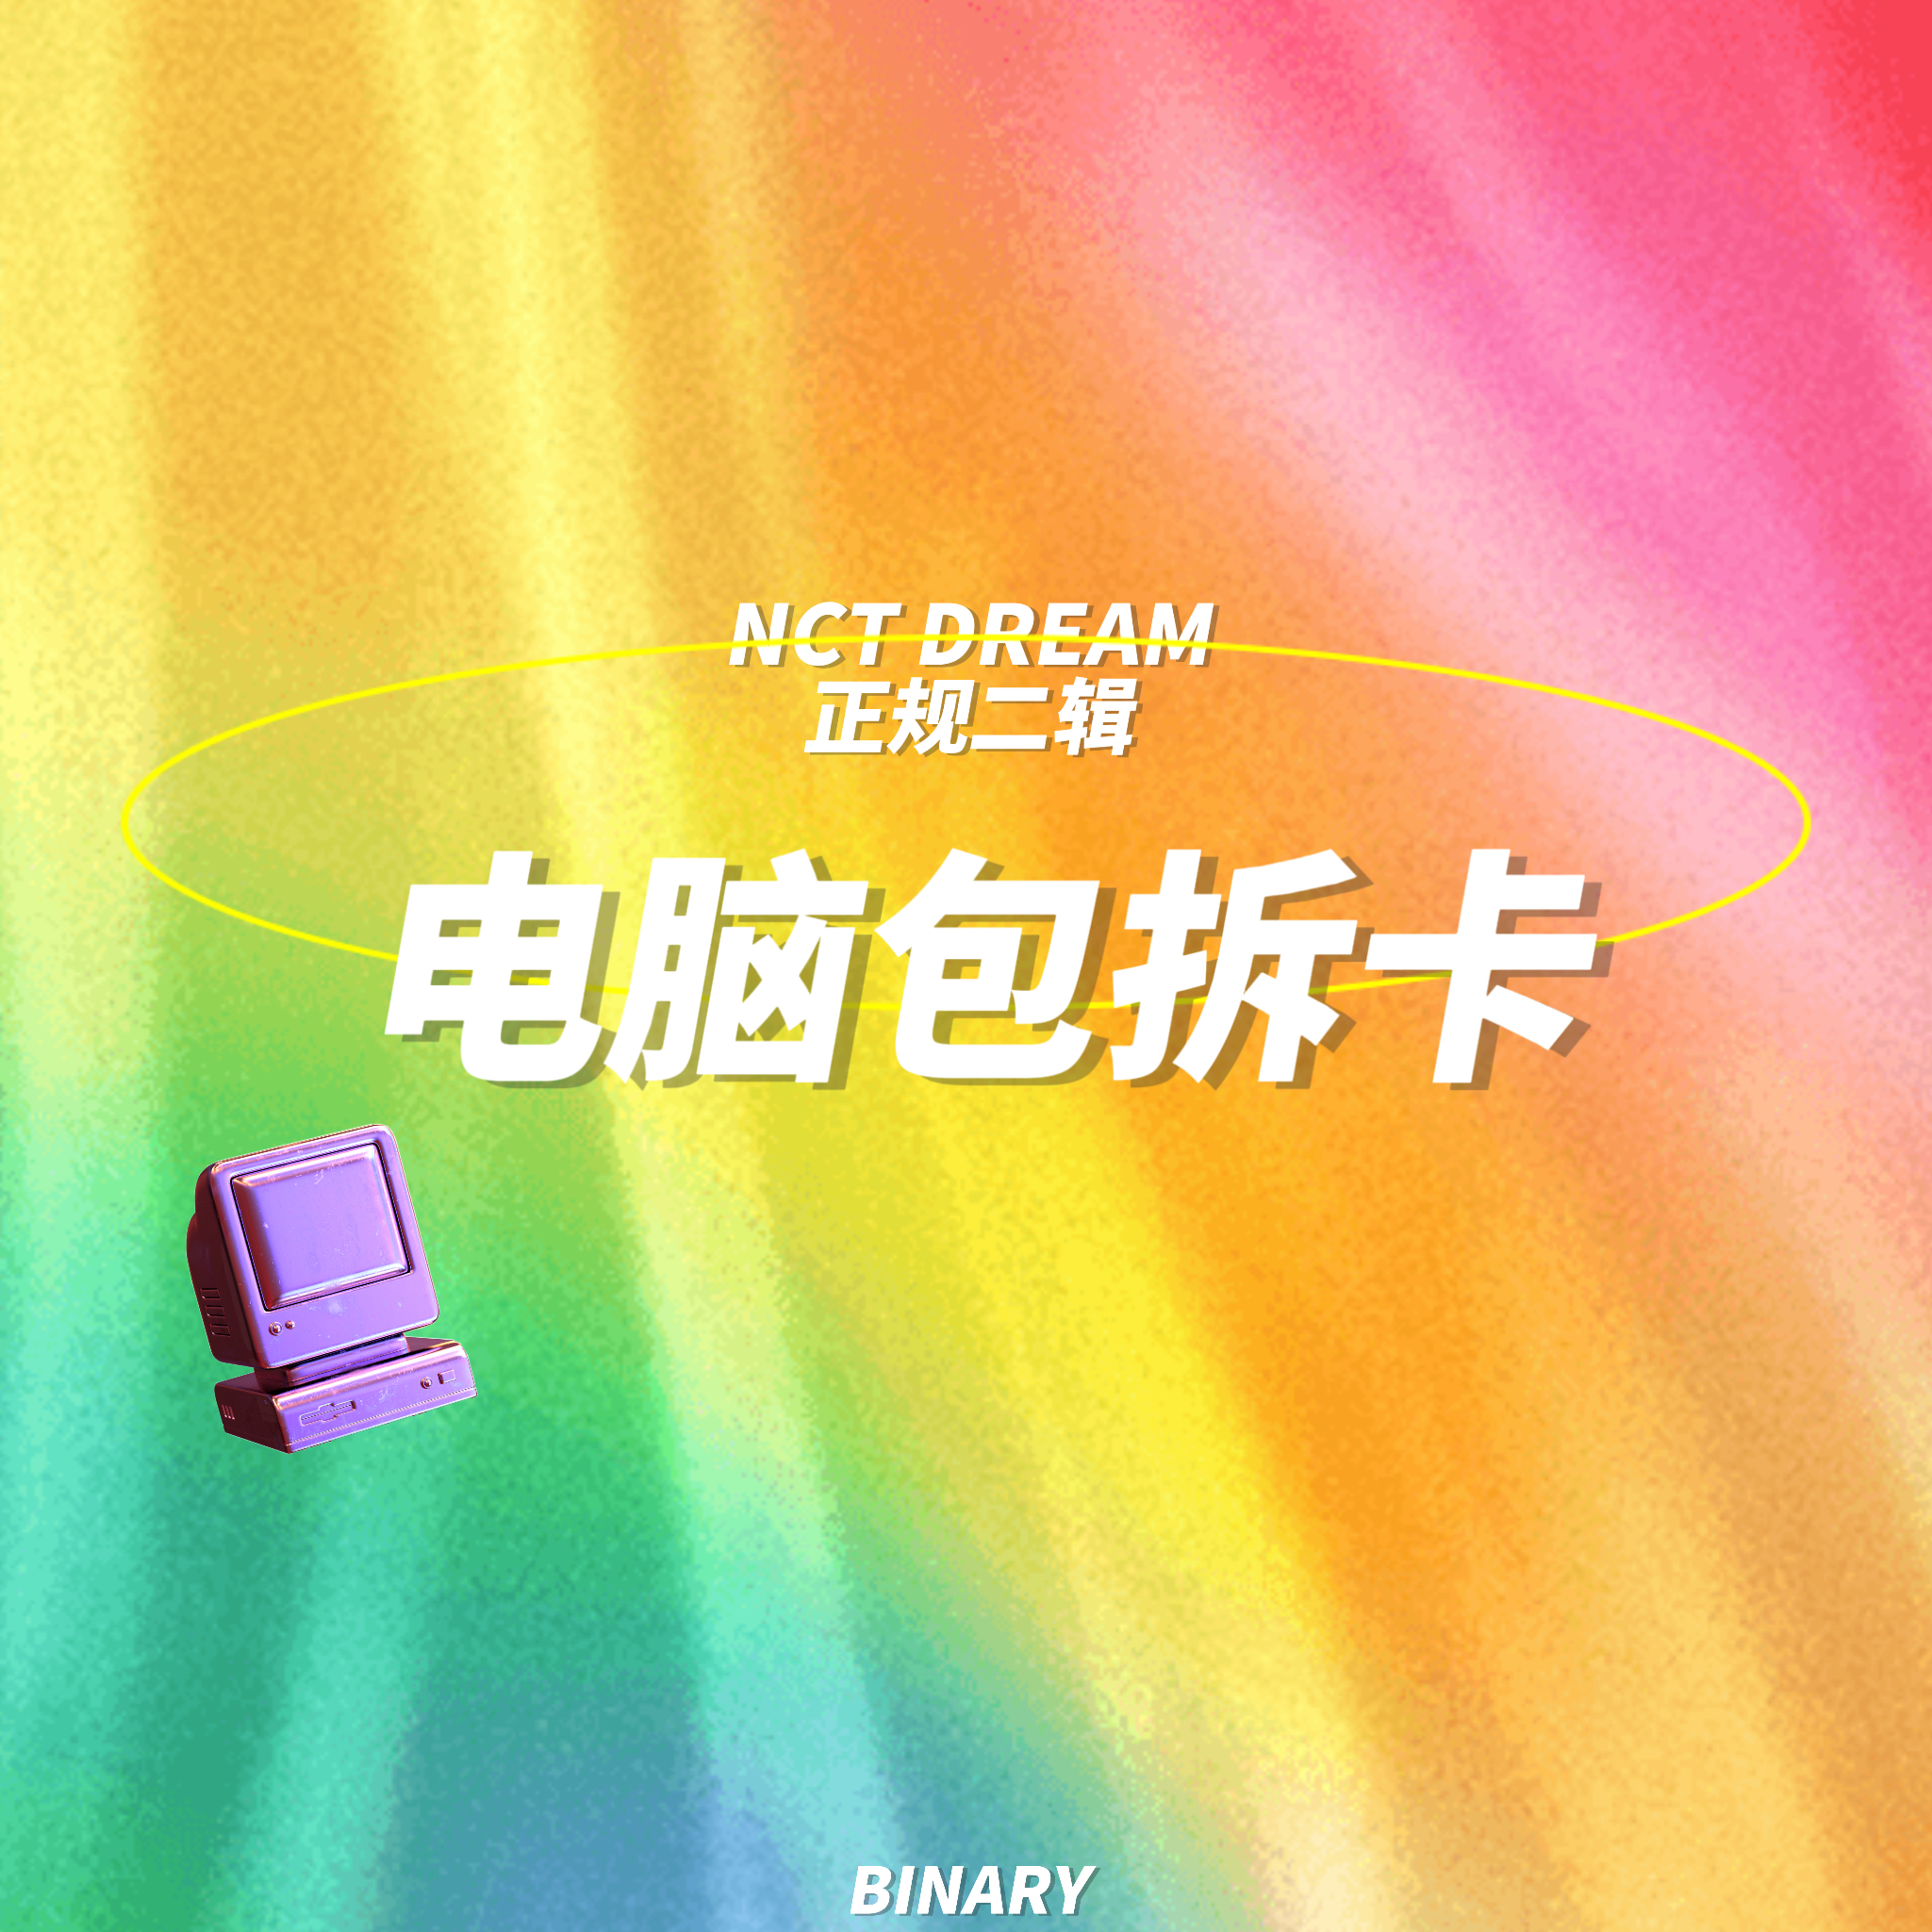 cn.ktown4u.com : [拆卡专电脑包特典] NCT DREAM - 正规2辑[Glitch